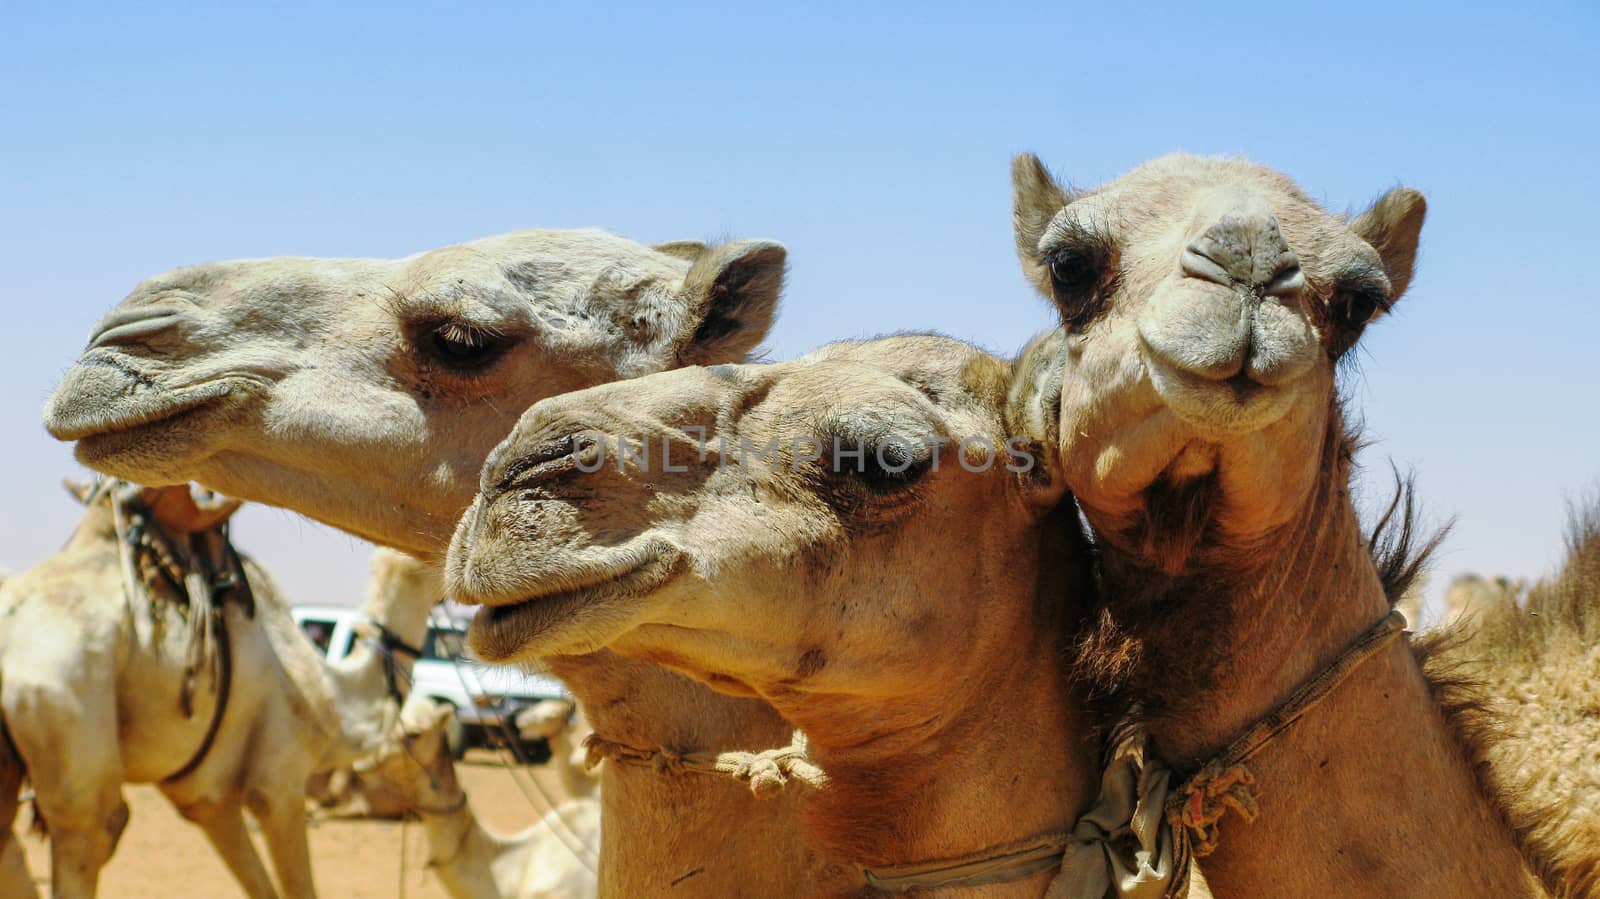 Camels in the camel market in Omdurman Sudan by homocosmicos